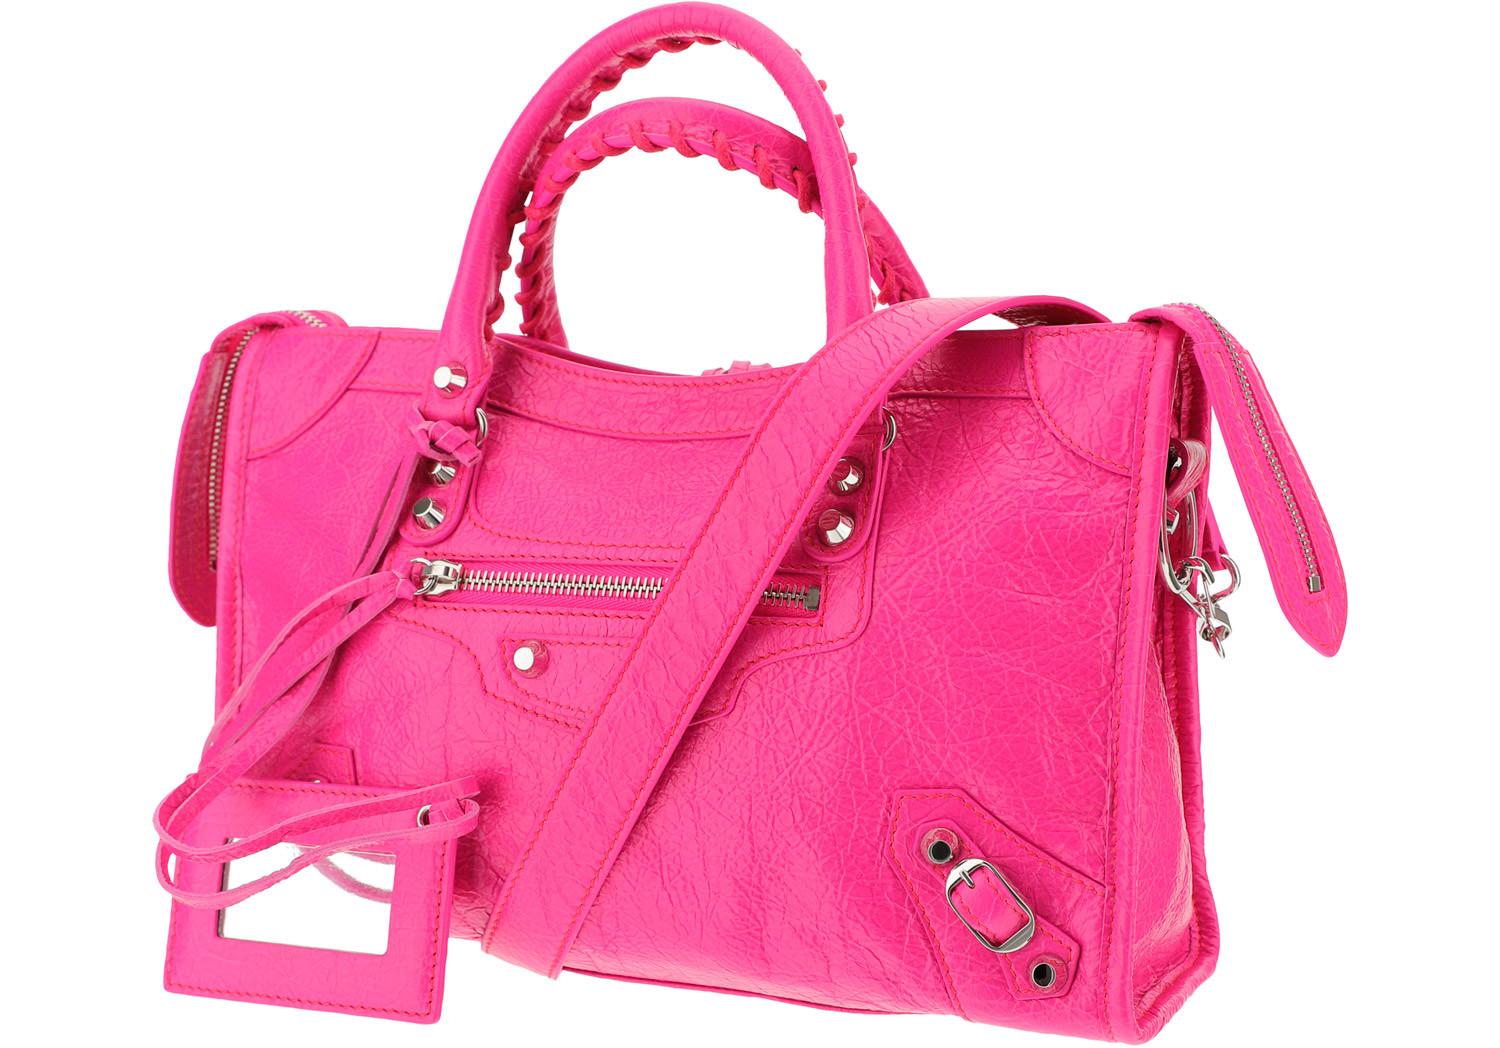 Balenciaga Bright Pink Leather City Bag at FORZIERI